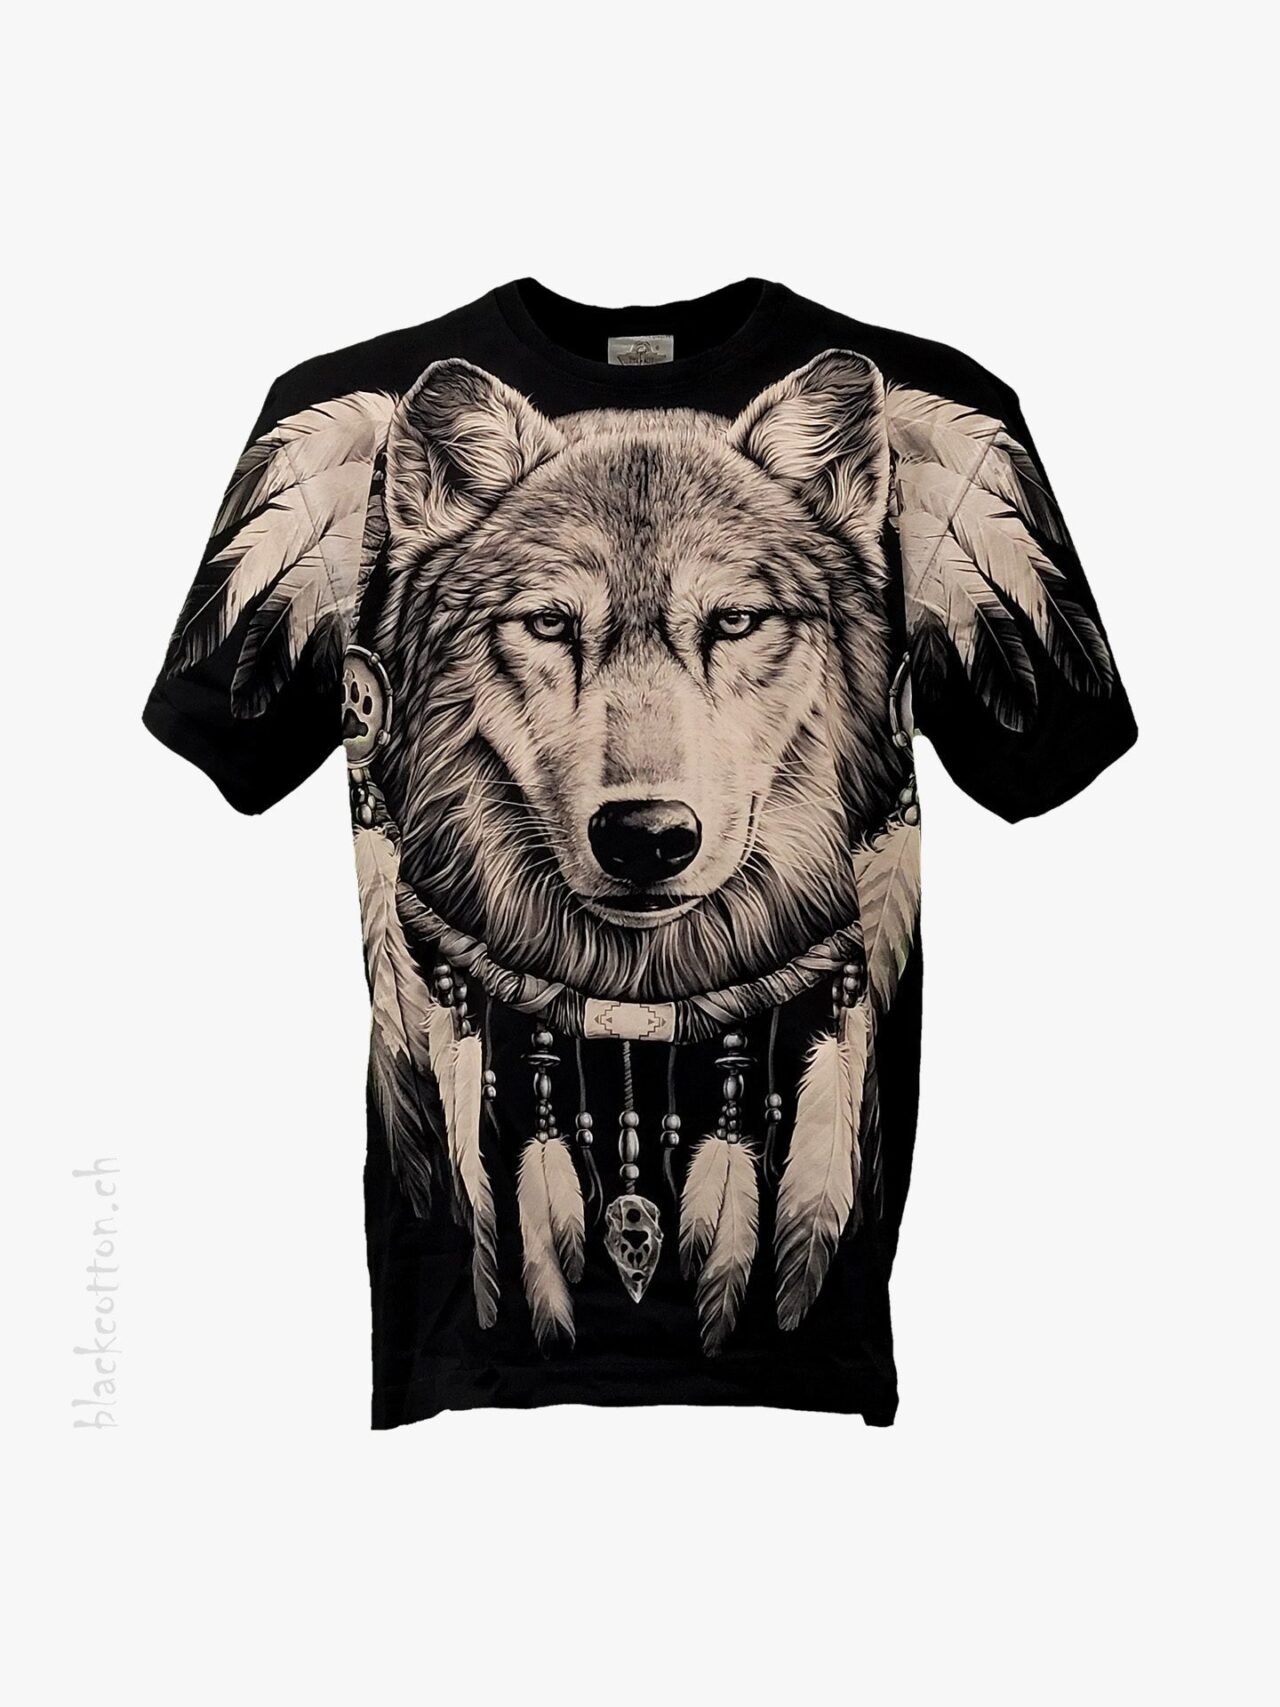 T-Shirt Traumfänger Wolf ROCK-EAGLE